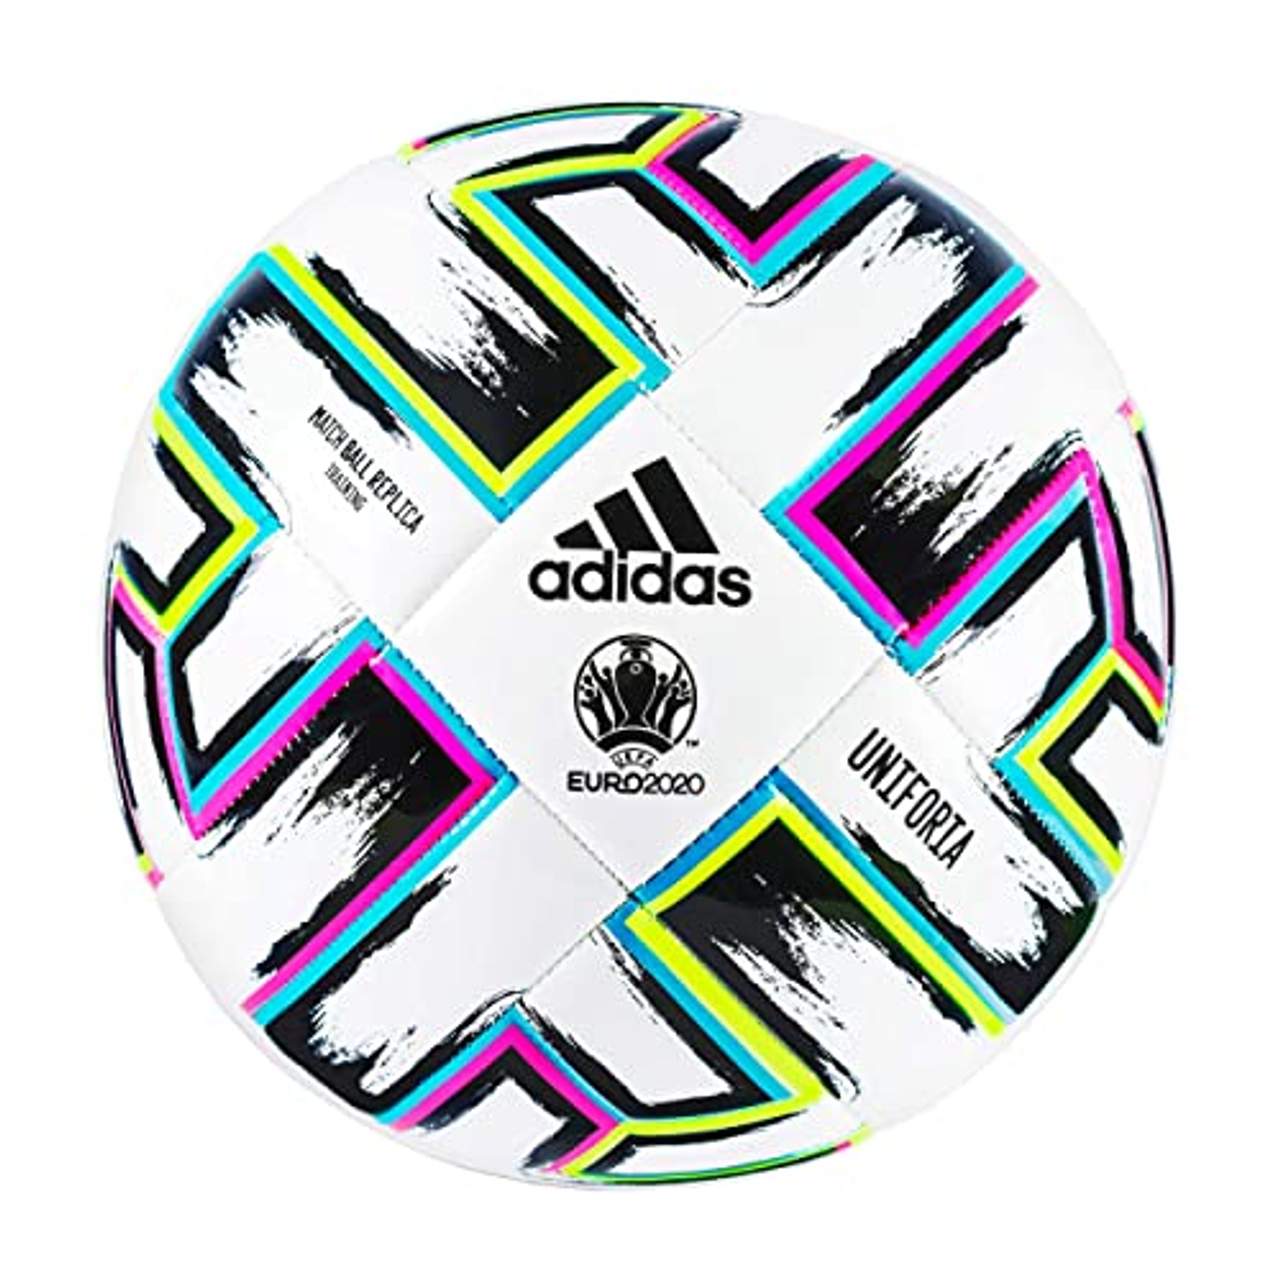 adidas Men's Unifo TRN Soccer Ball